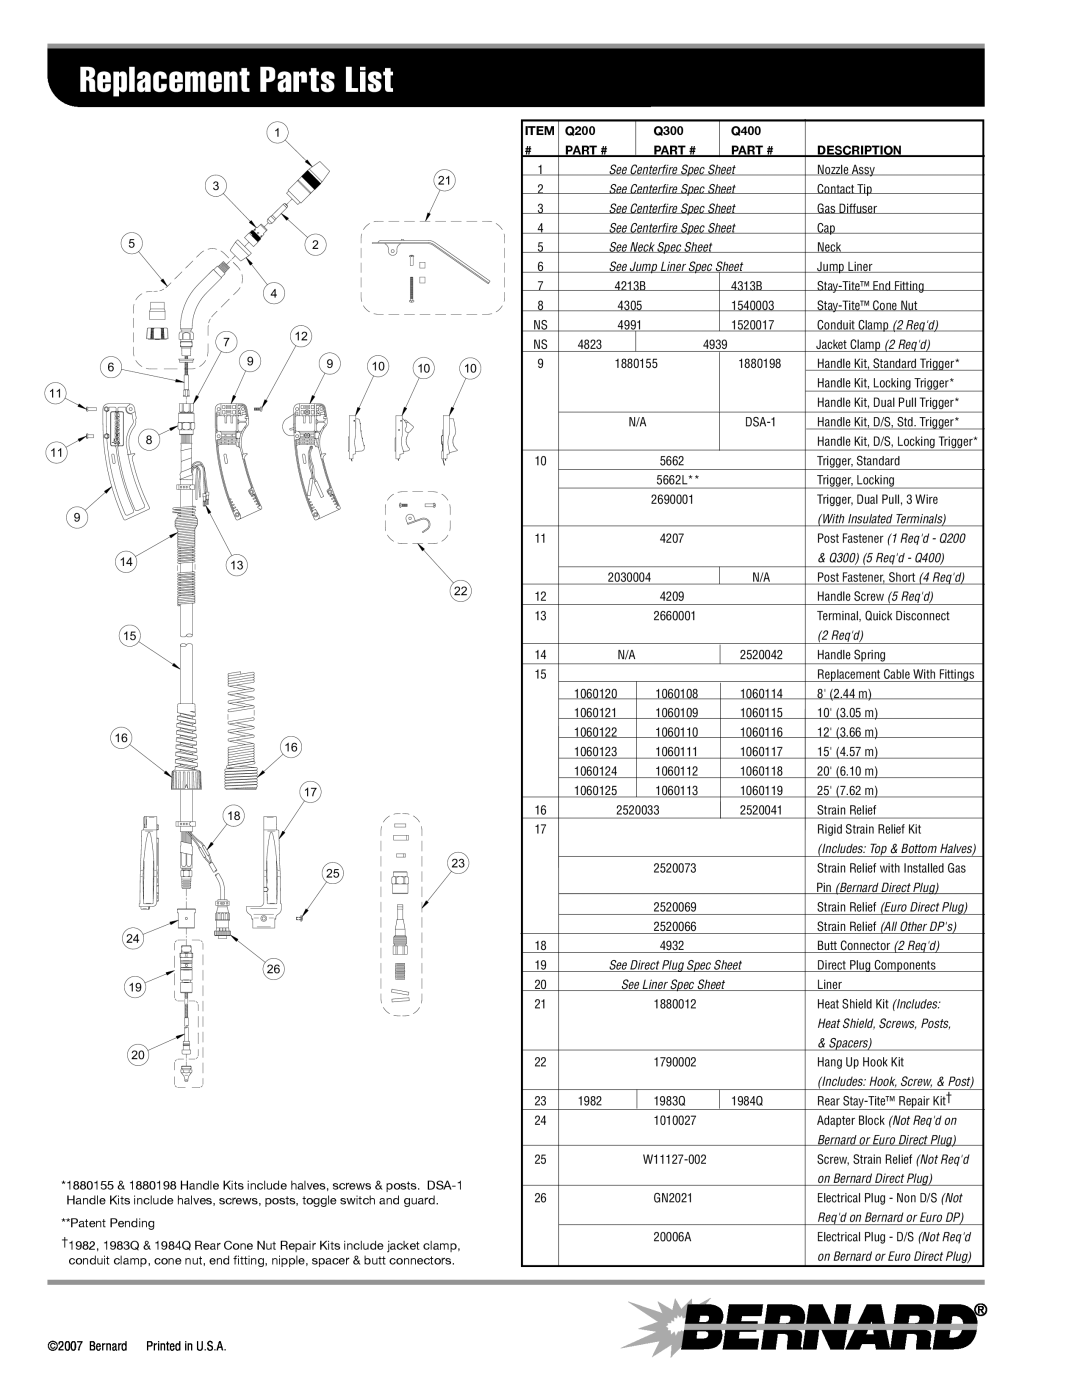 Bernard Q200 manual Replacement Parts List, Q300, Q400, Part #, Description 